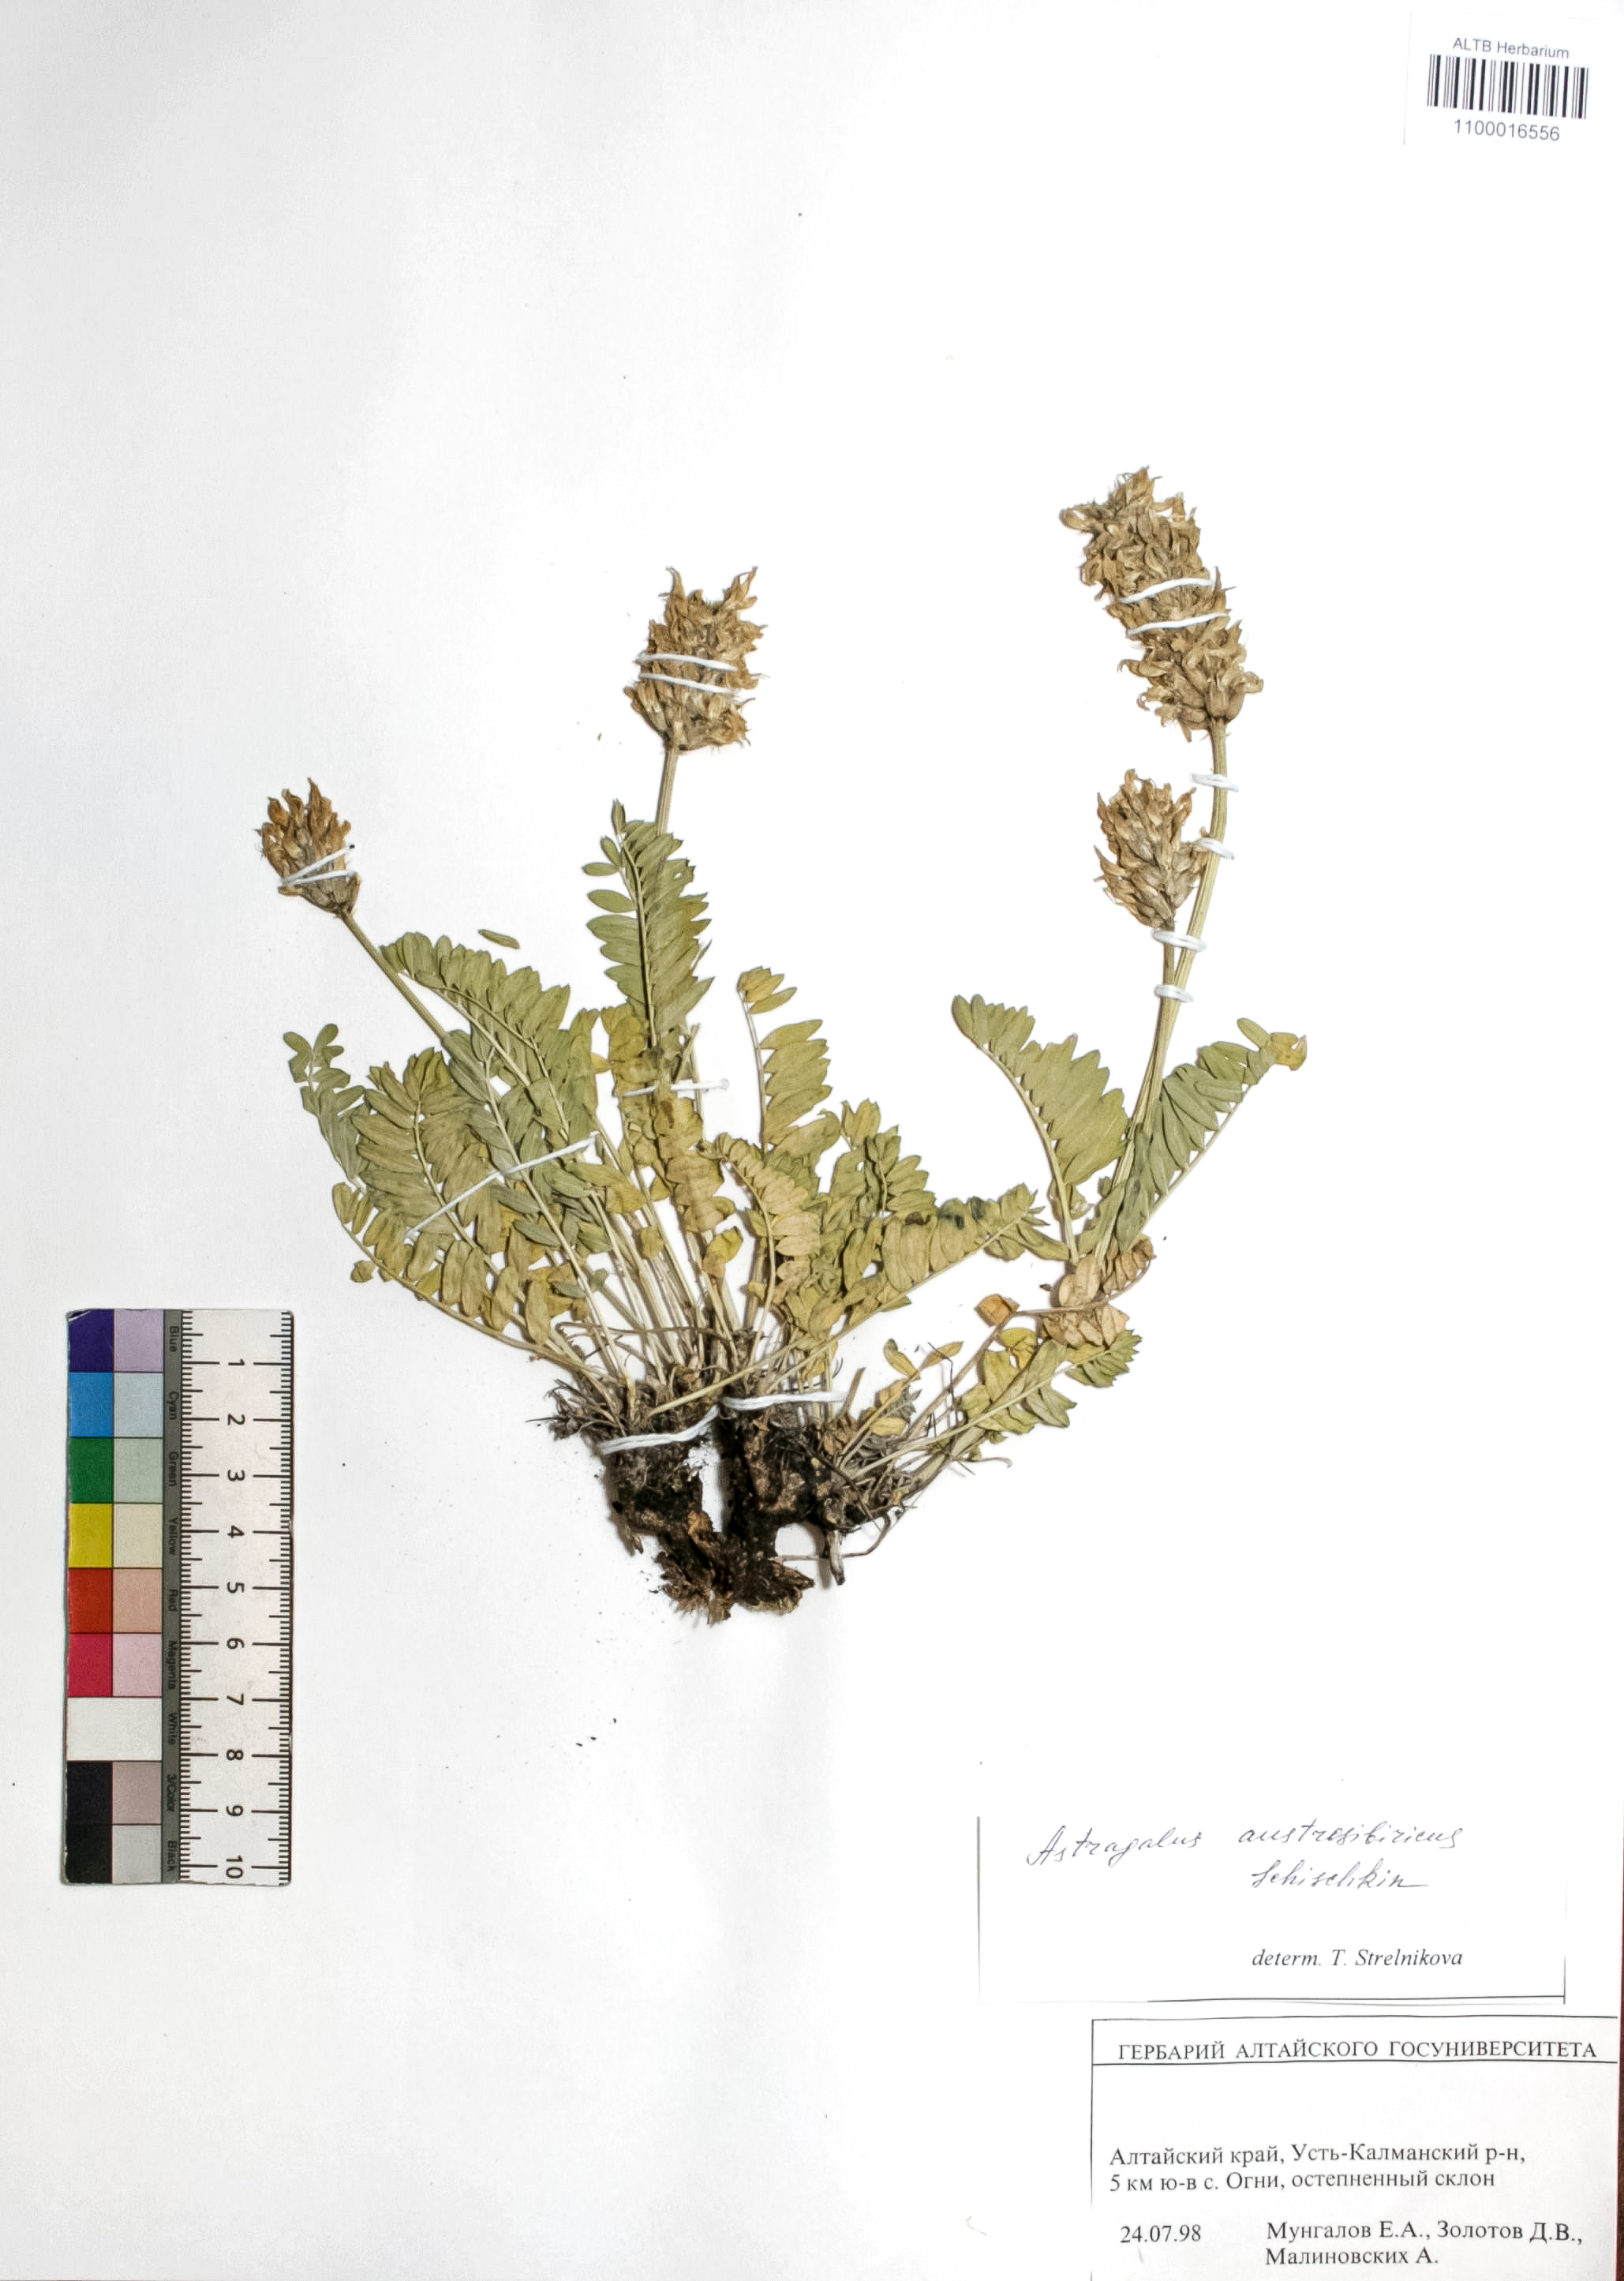 Astragalus austrosibiricus Schischk.